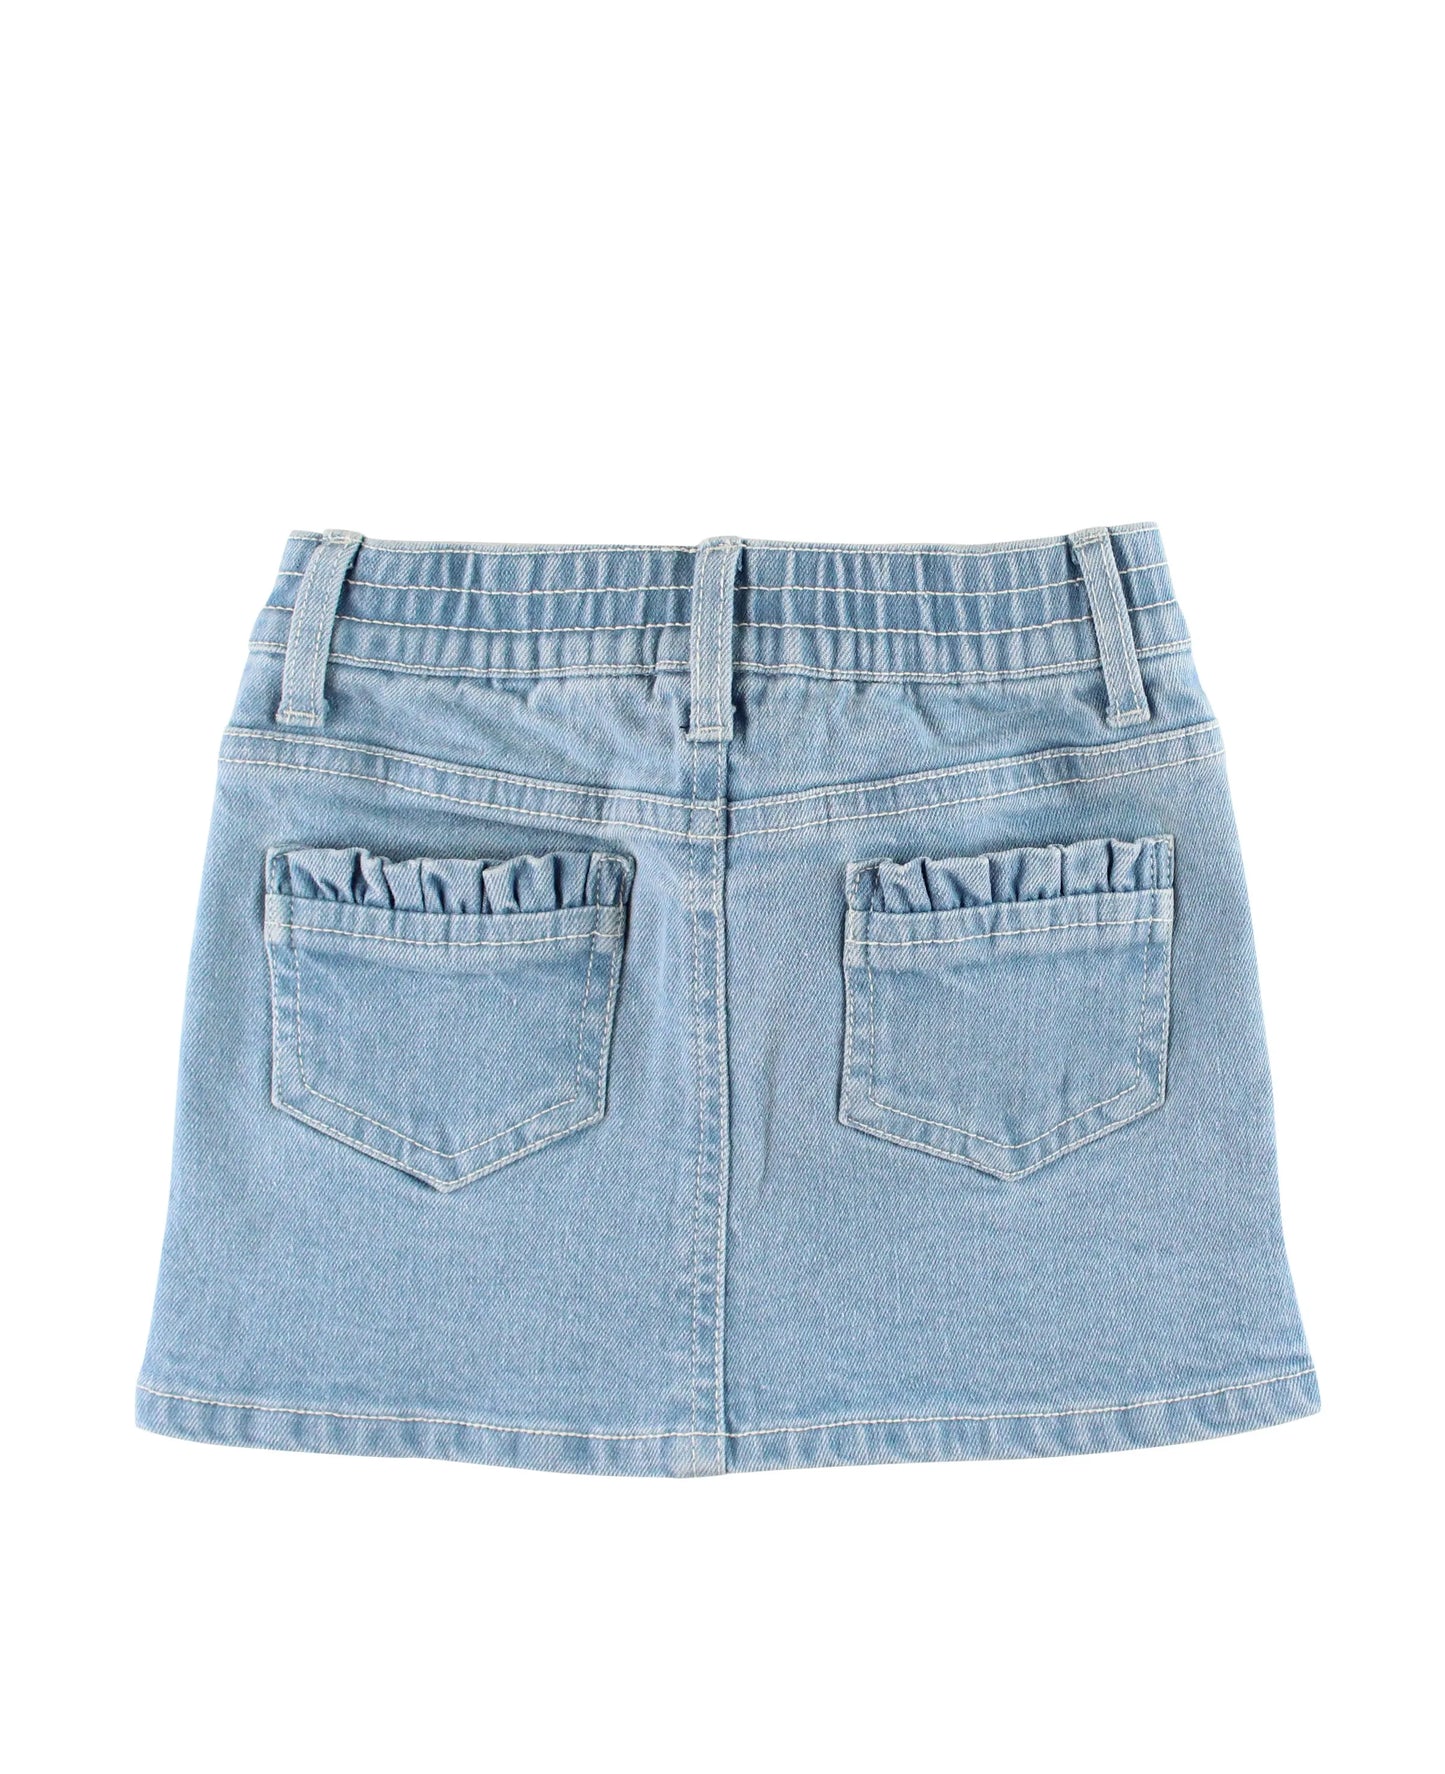 Ruffle Skirt - Jean